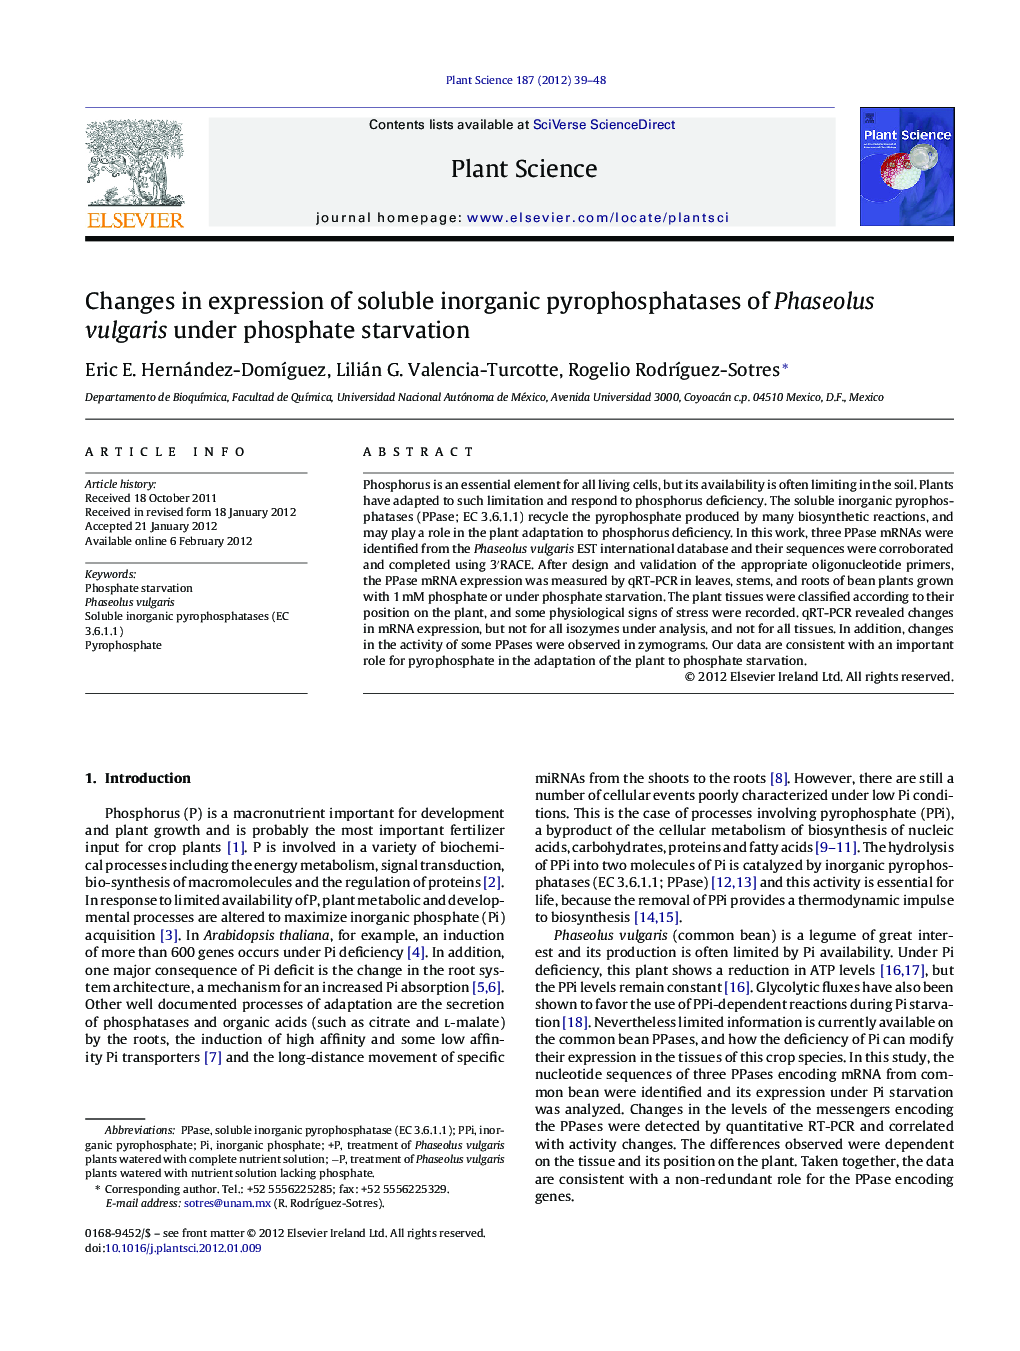 Changes in expression of soluble inorganic pyrophosphatases of Phaseolus vulgaris under phosphate starvation